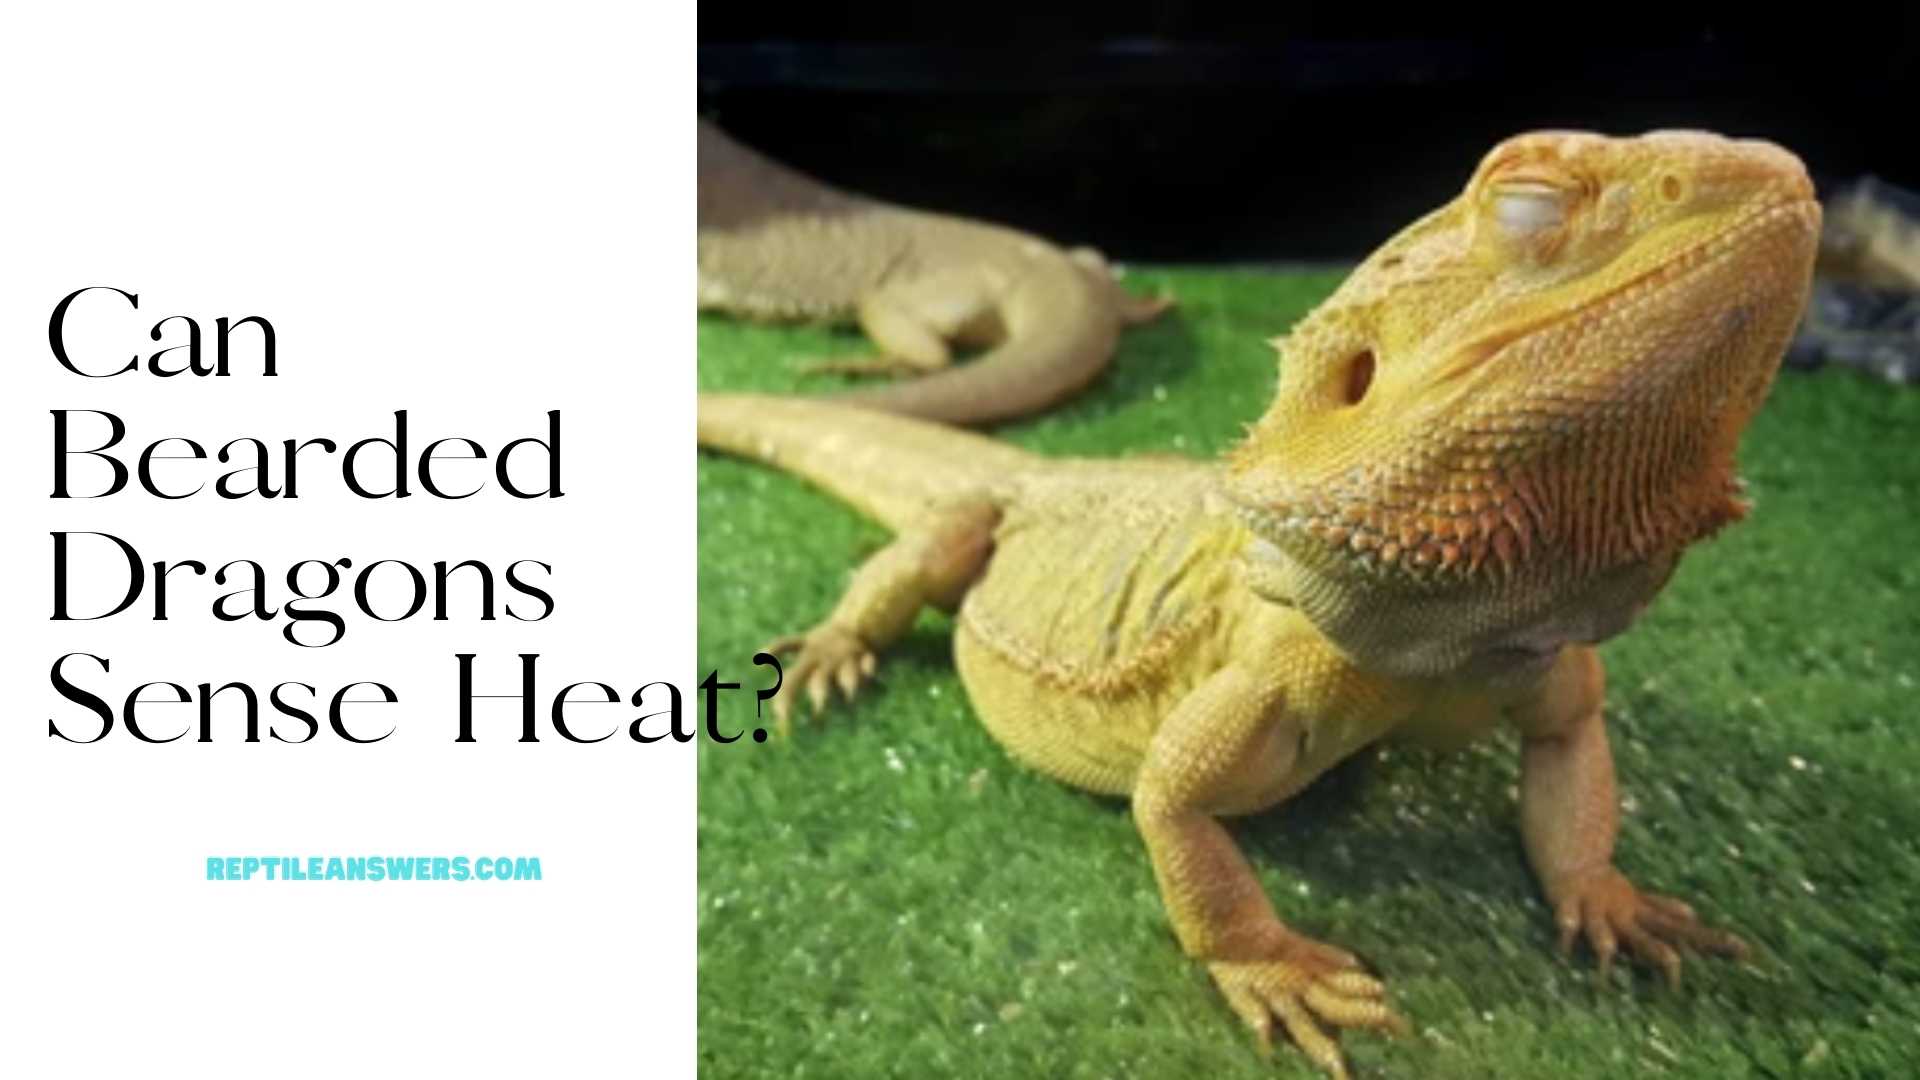 can bearded dragons sense heat?